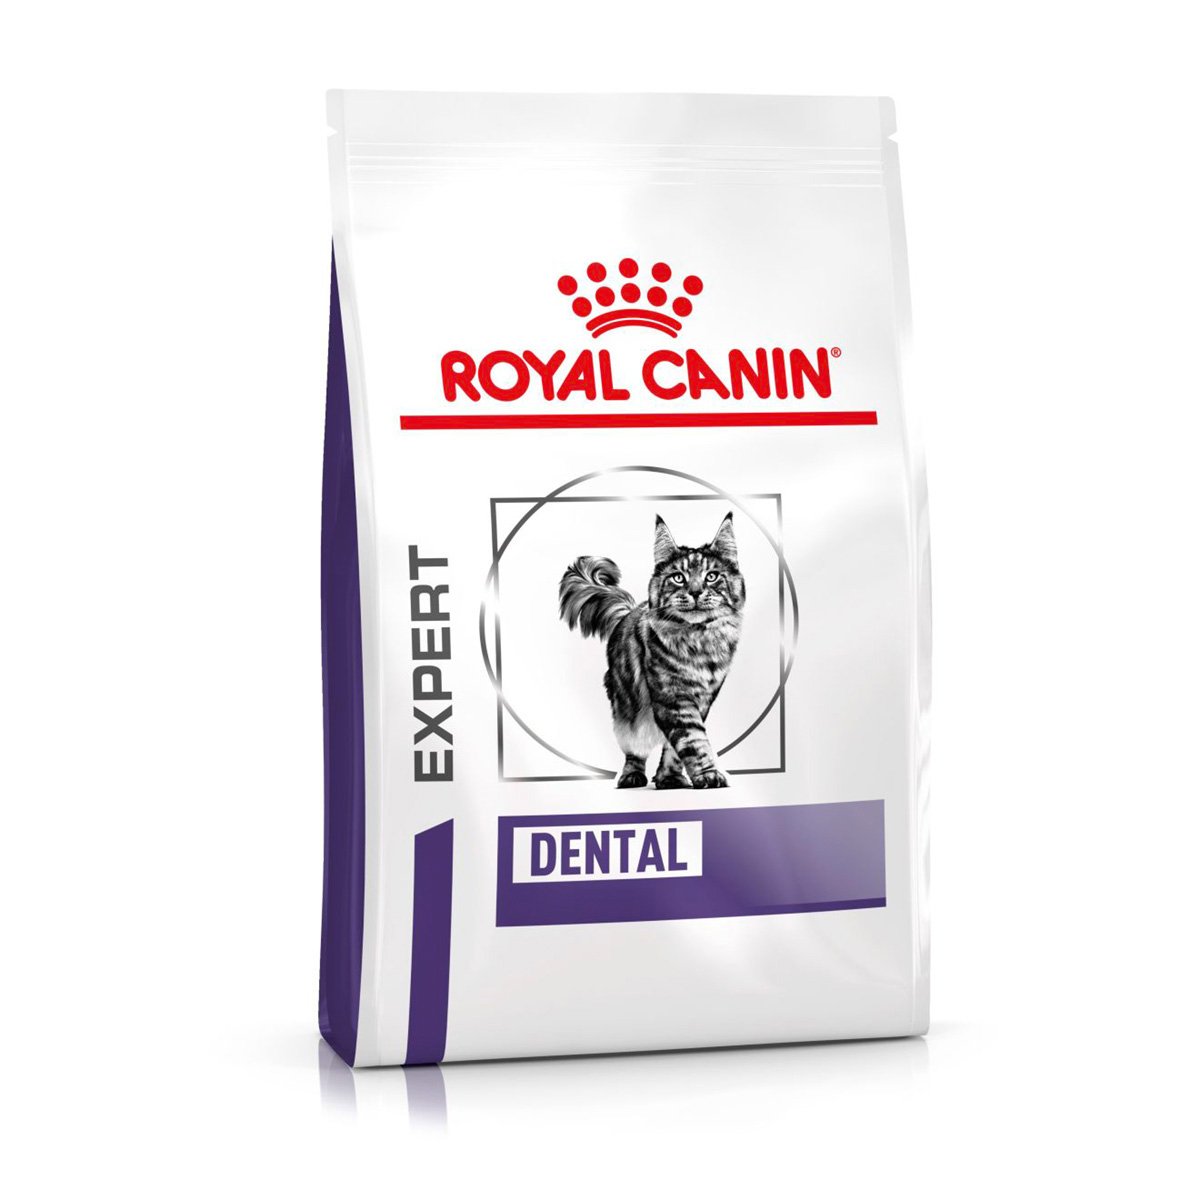 ROYAL CANIN® Expert DENTAL Trockenfutter für Katzen 3kg von Royal Canin